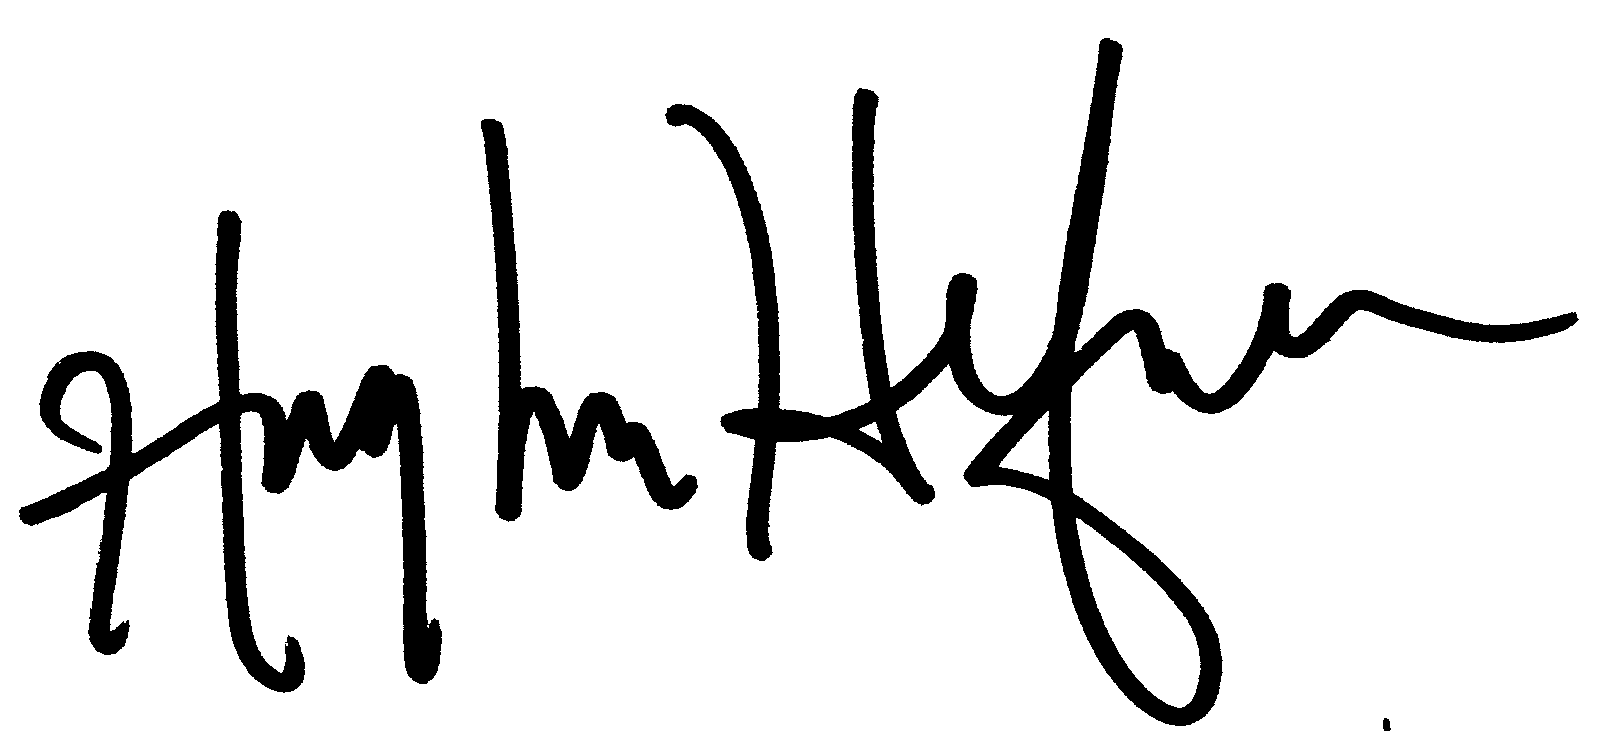 Hugh Hefner autograph facsimile